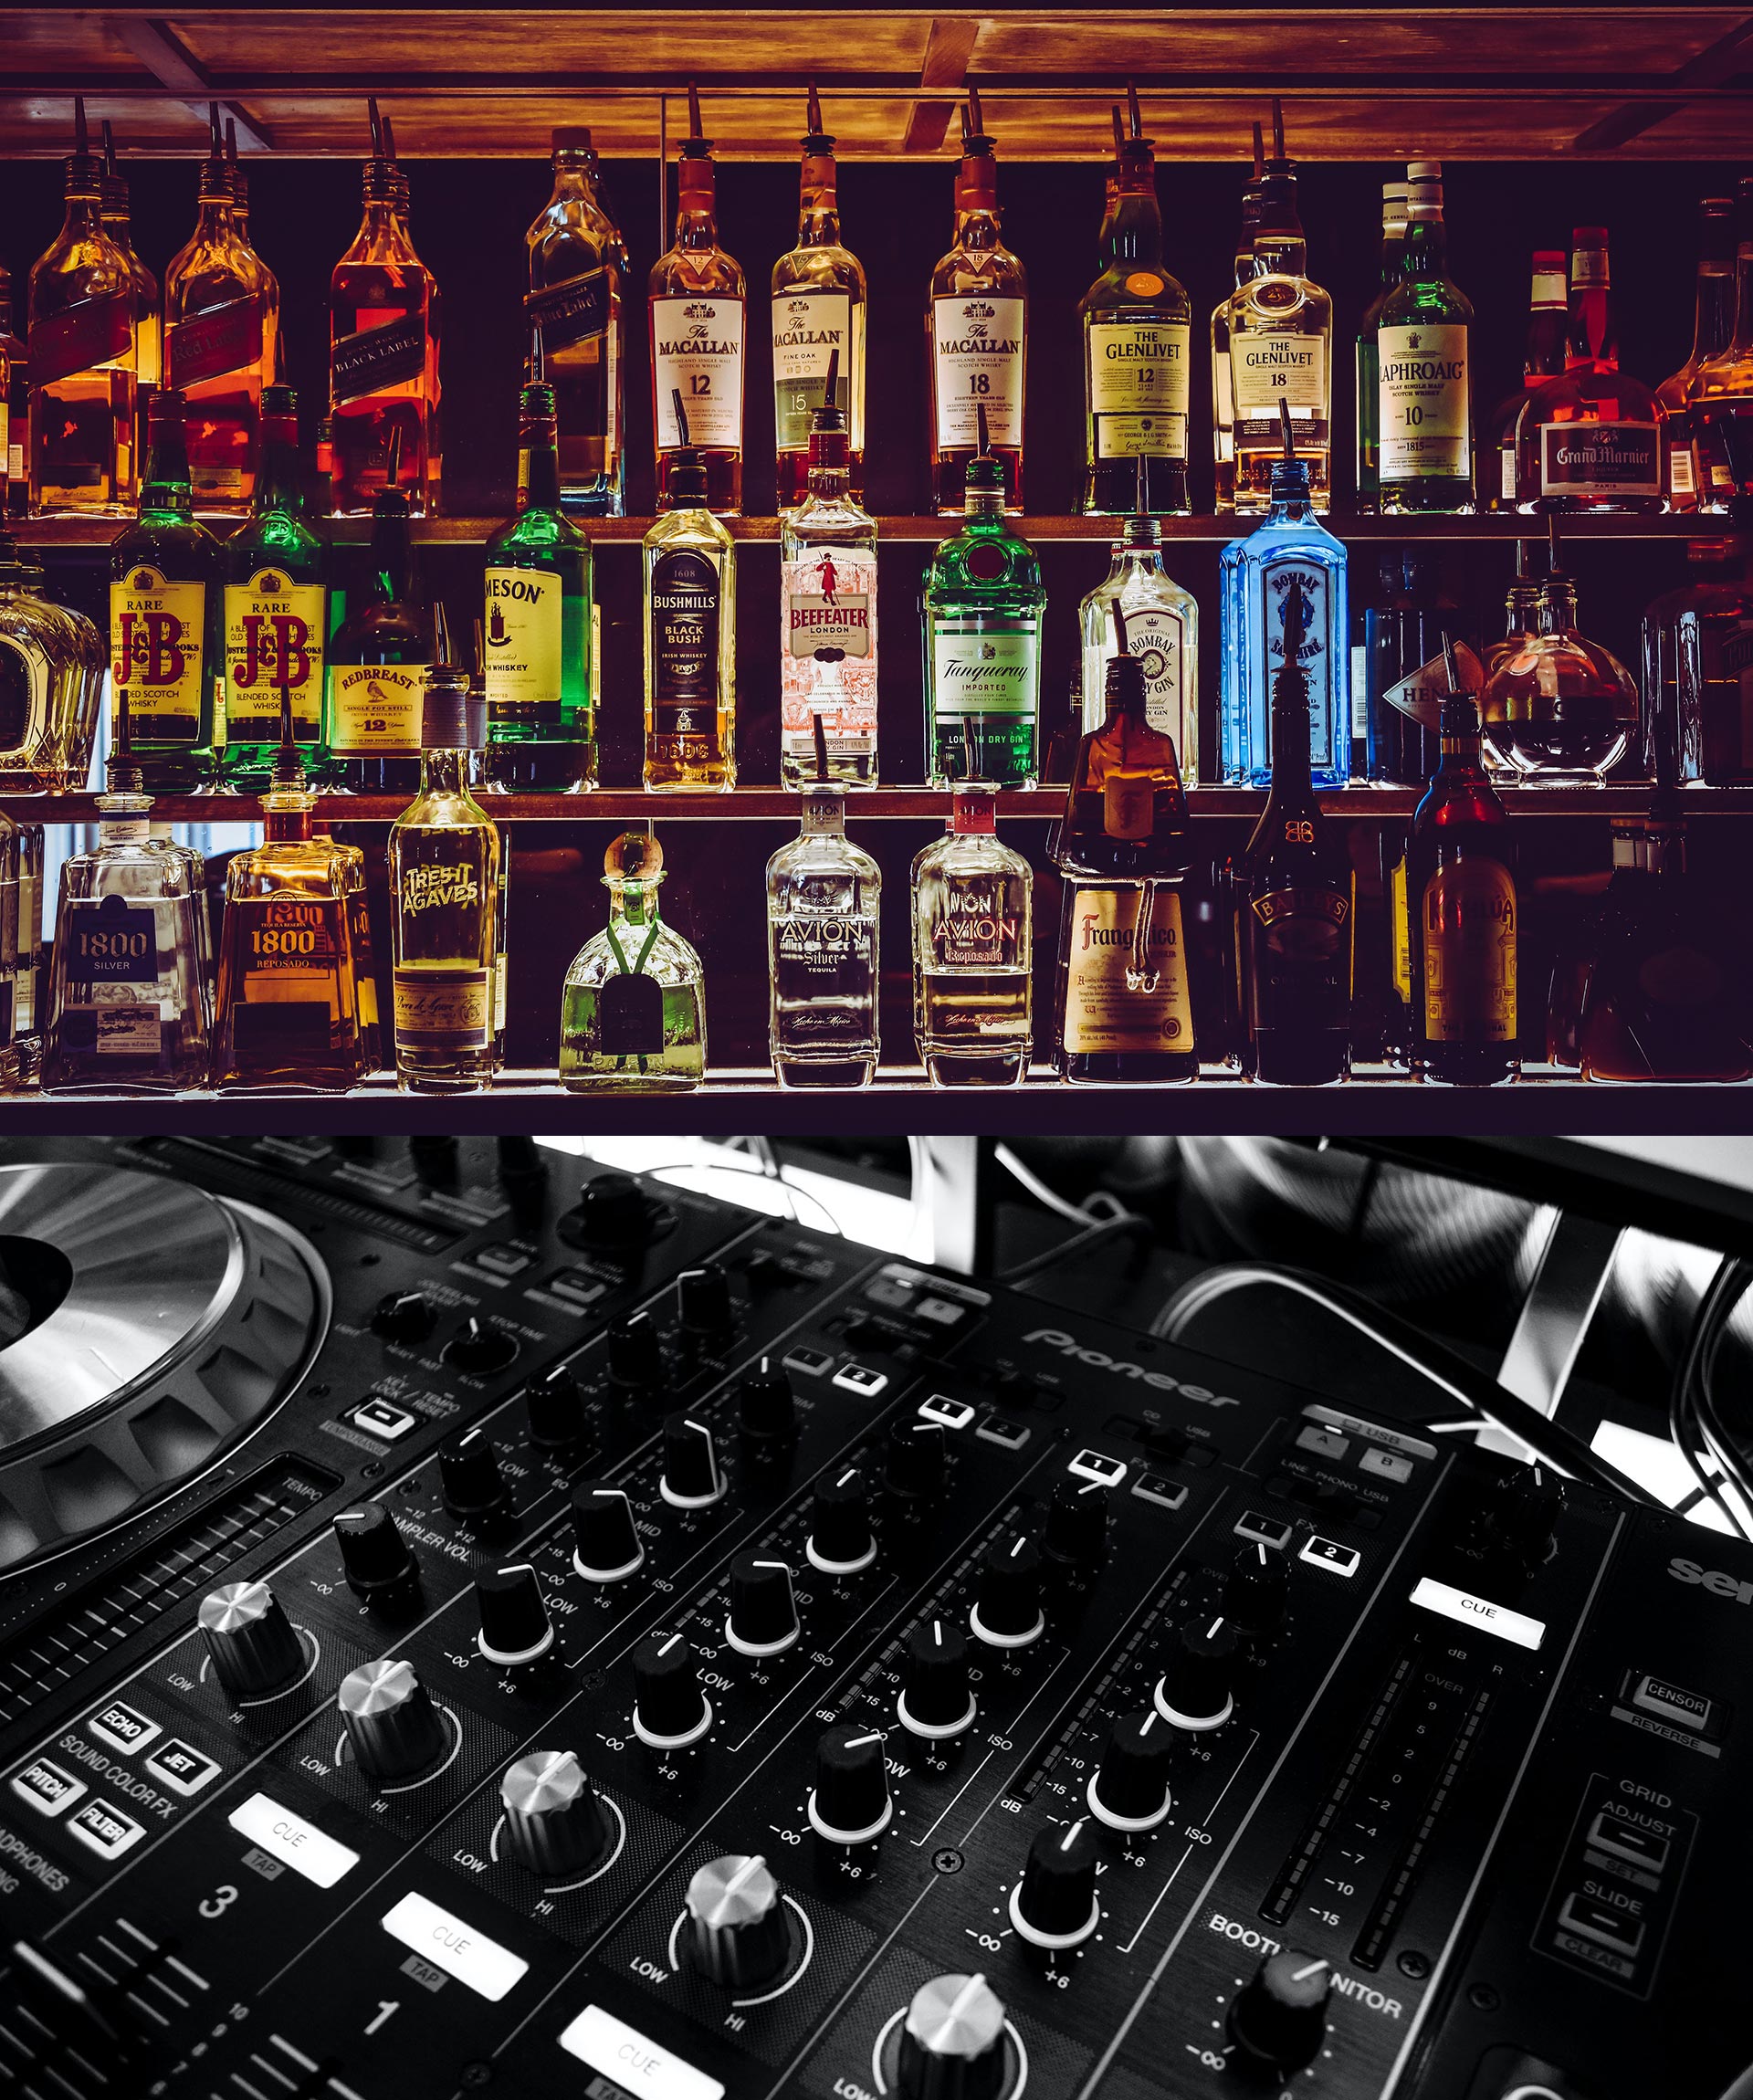 Why do DJs drink?